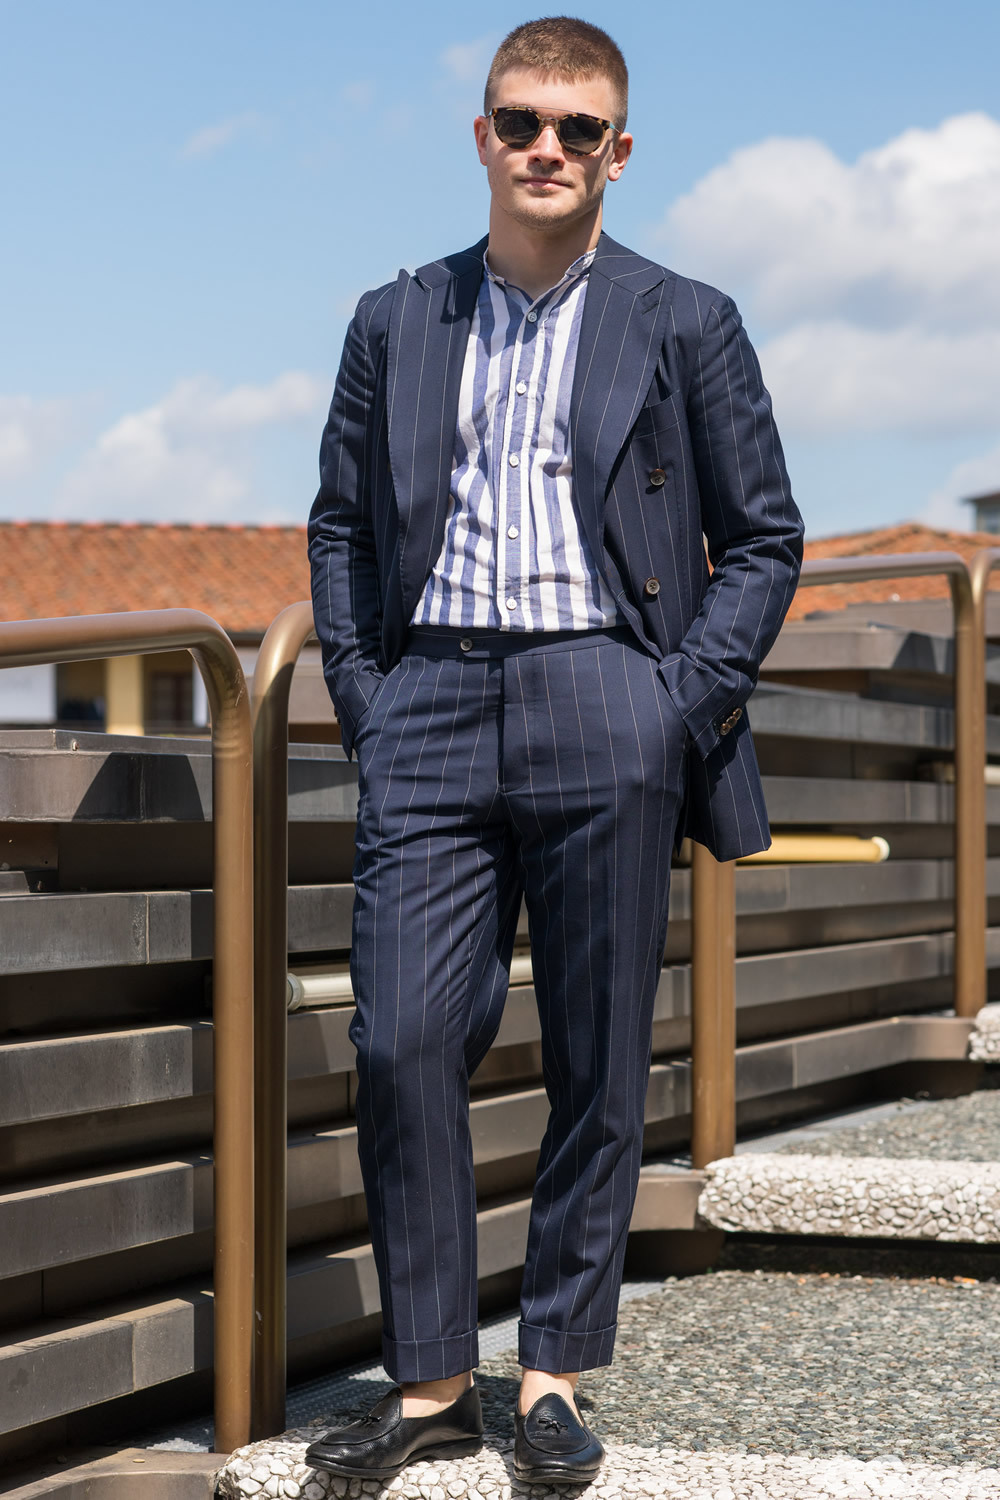 James
Sunglasses: RetroSuperFuture
Suit: Suit Supply
Shirt: Salvatore Picolo
Shoes: vintage

Inspiration: Paying homage to Pitti Uomo! 
（致敬Pitti Uomo）